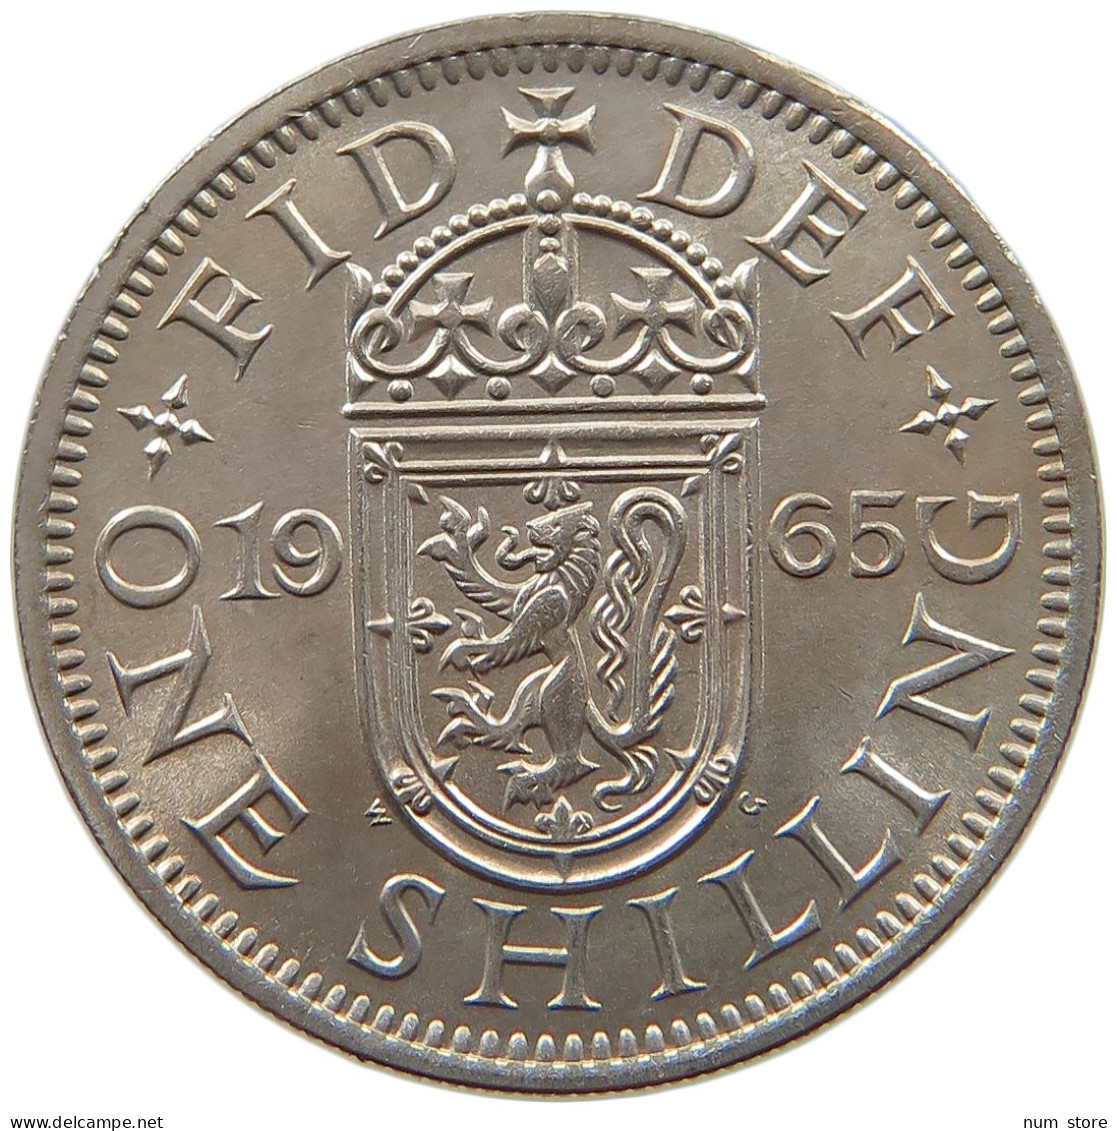 GREAT BRITAIN SHILLING 1965 Elisabeth II. (1952-) #s064 0467 - I. 1 Shilling